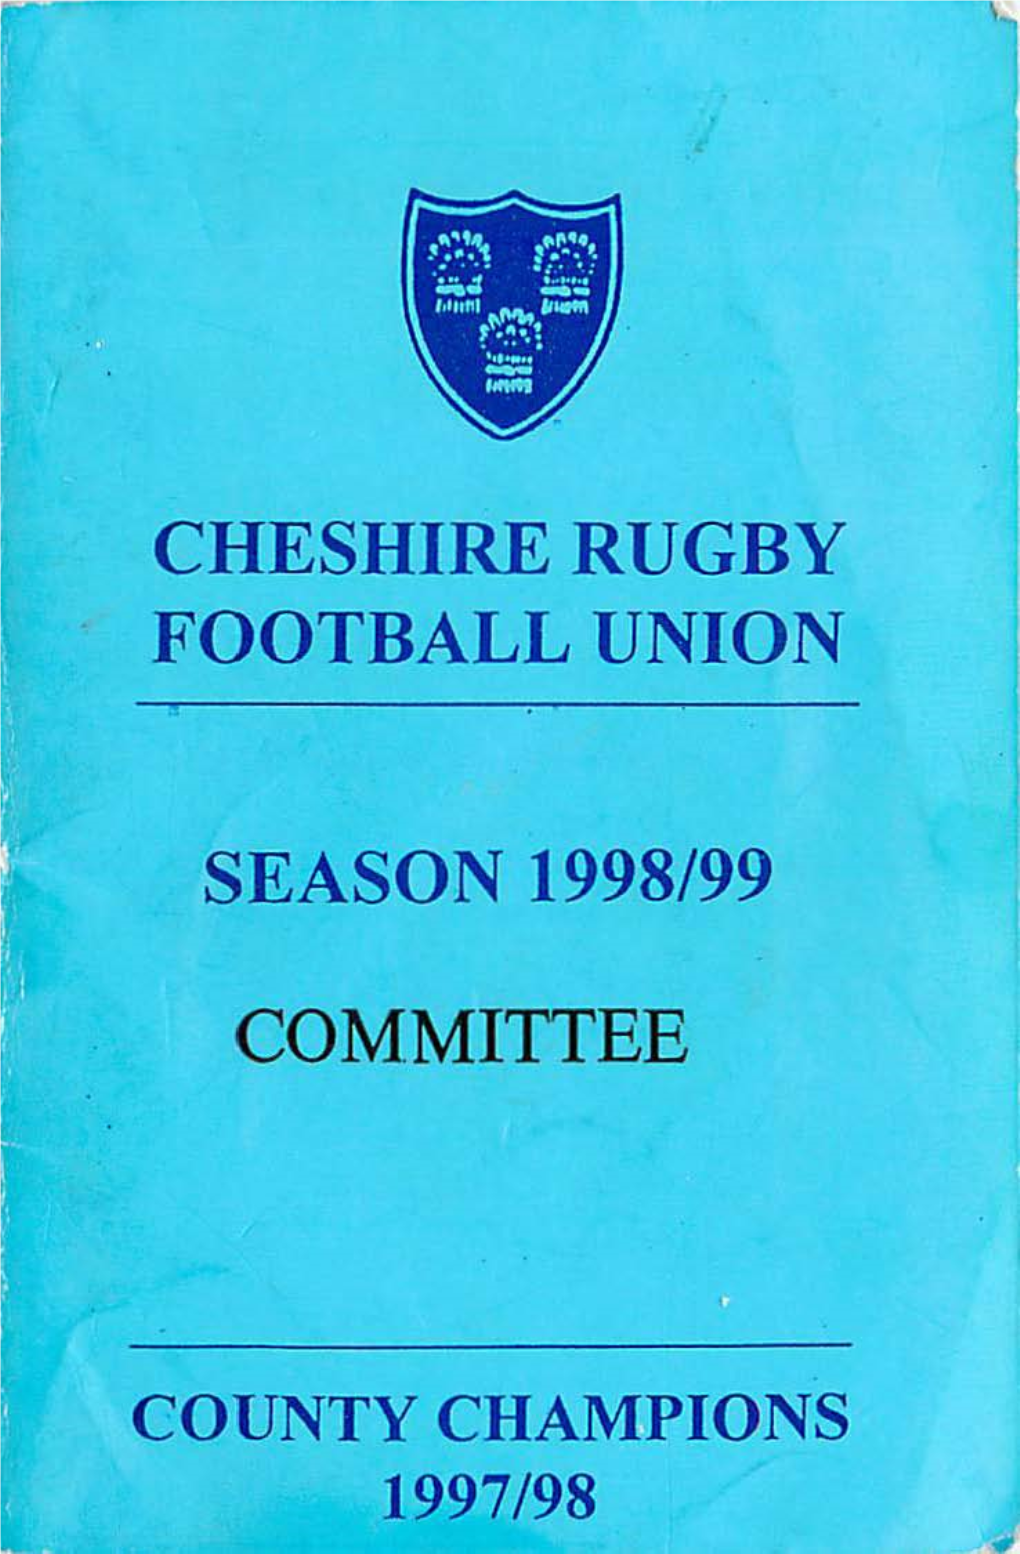 Cheshire Rugby Football Union Season 1998/99